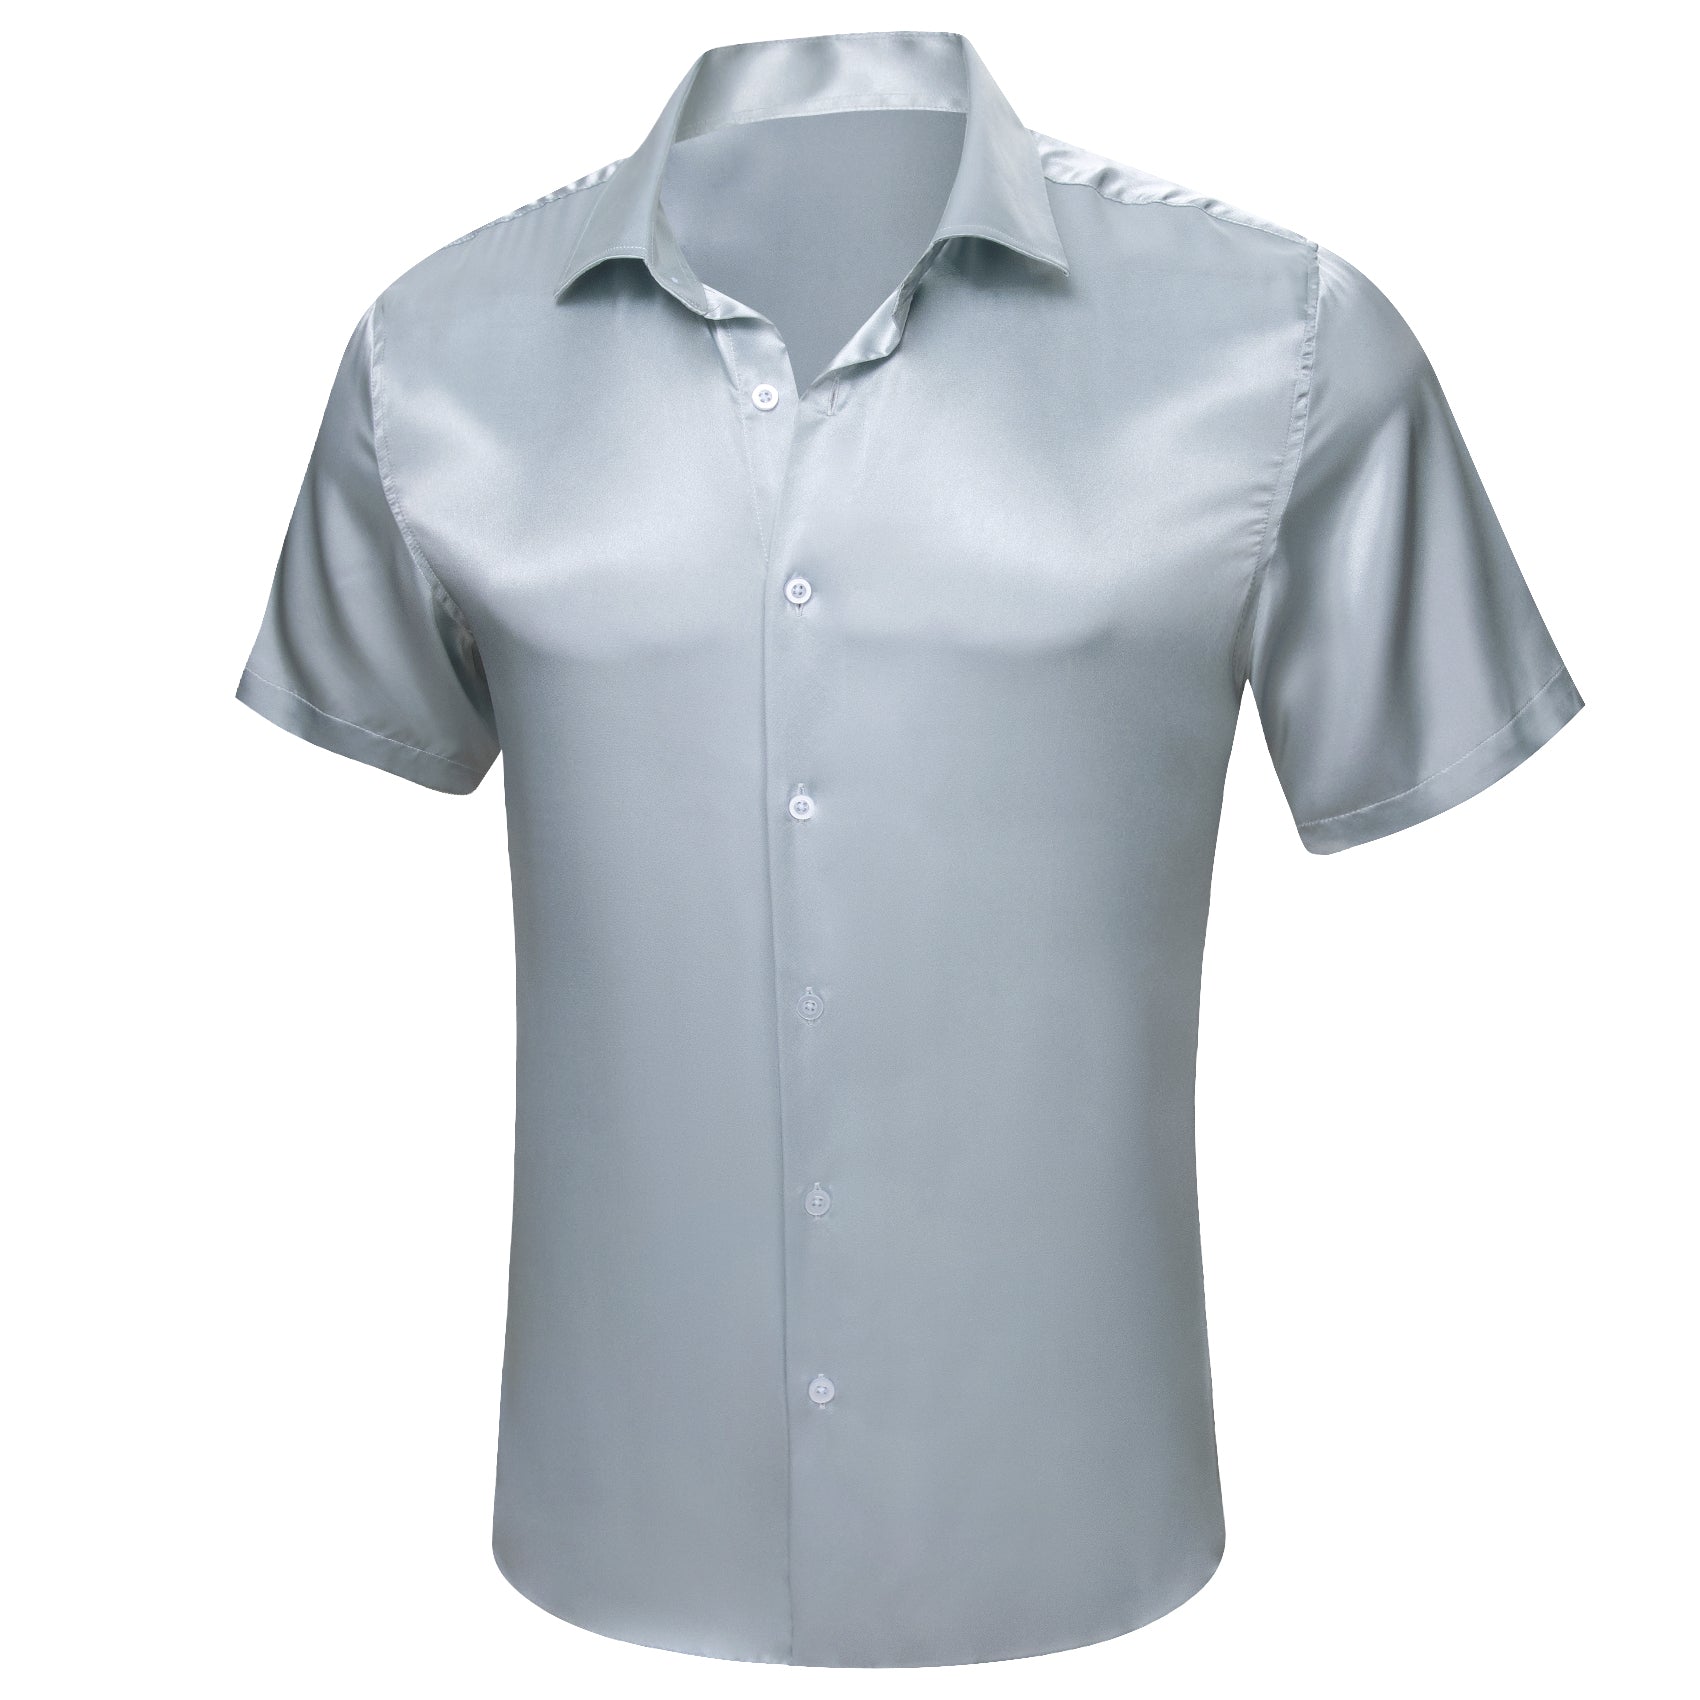 Barry.wang Silver Solid Short Sleeves Shirt